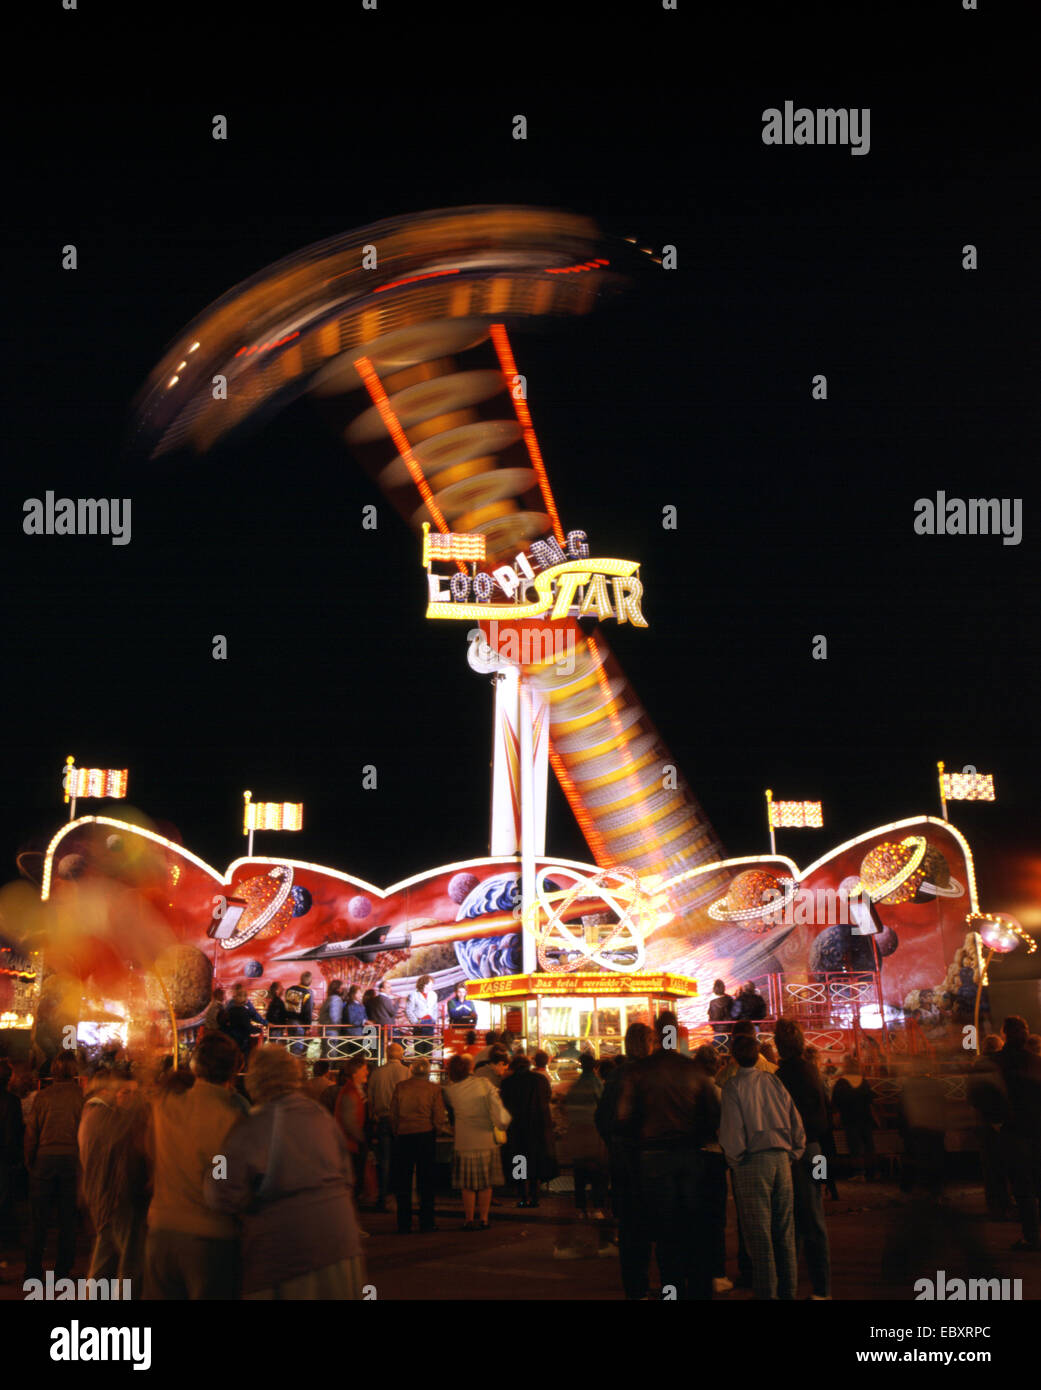 carusel at night Stock Photo - Alamy